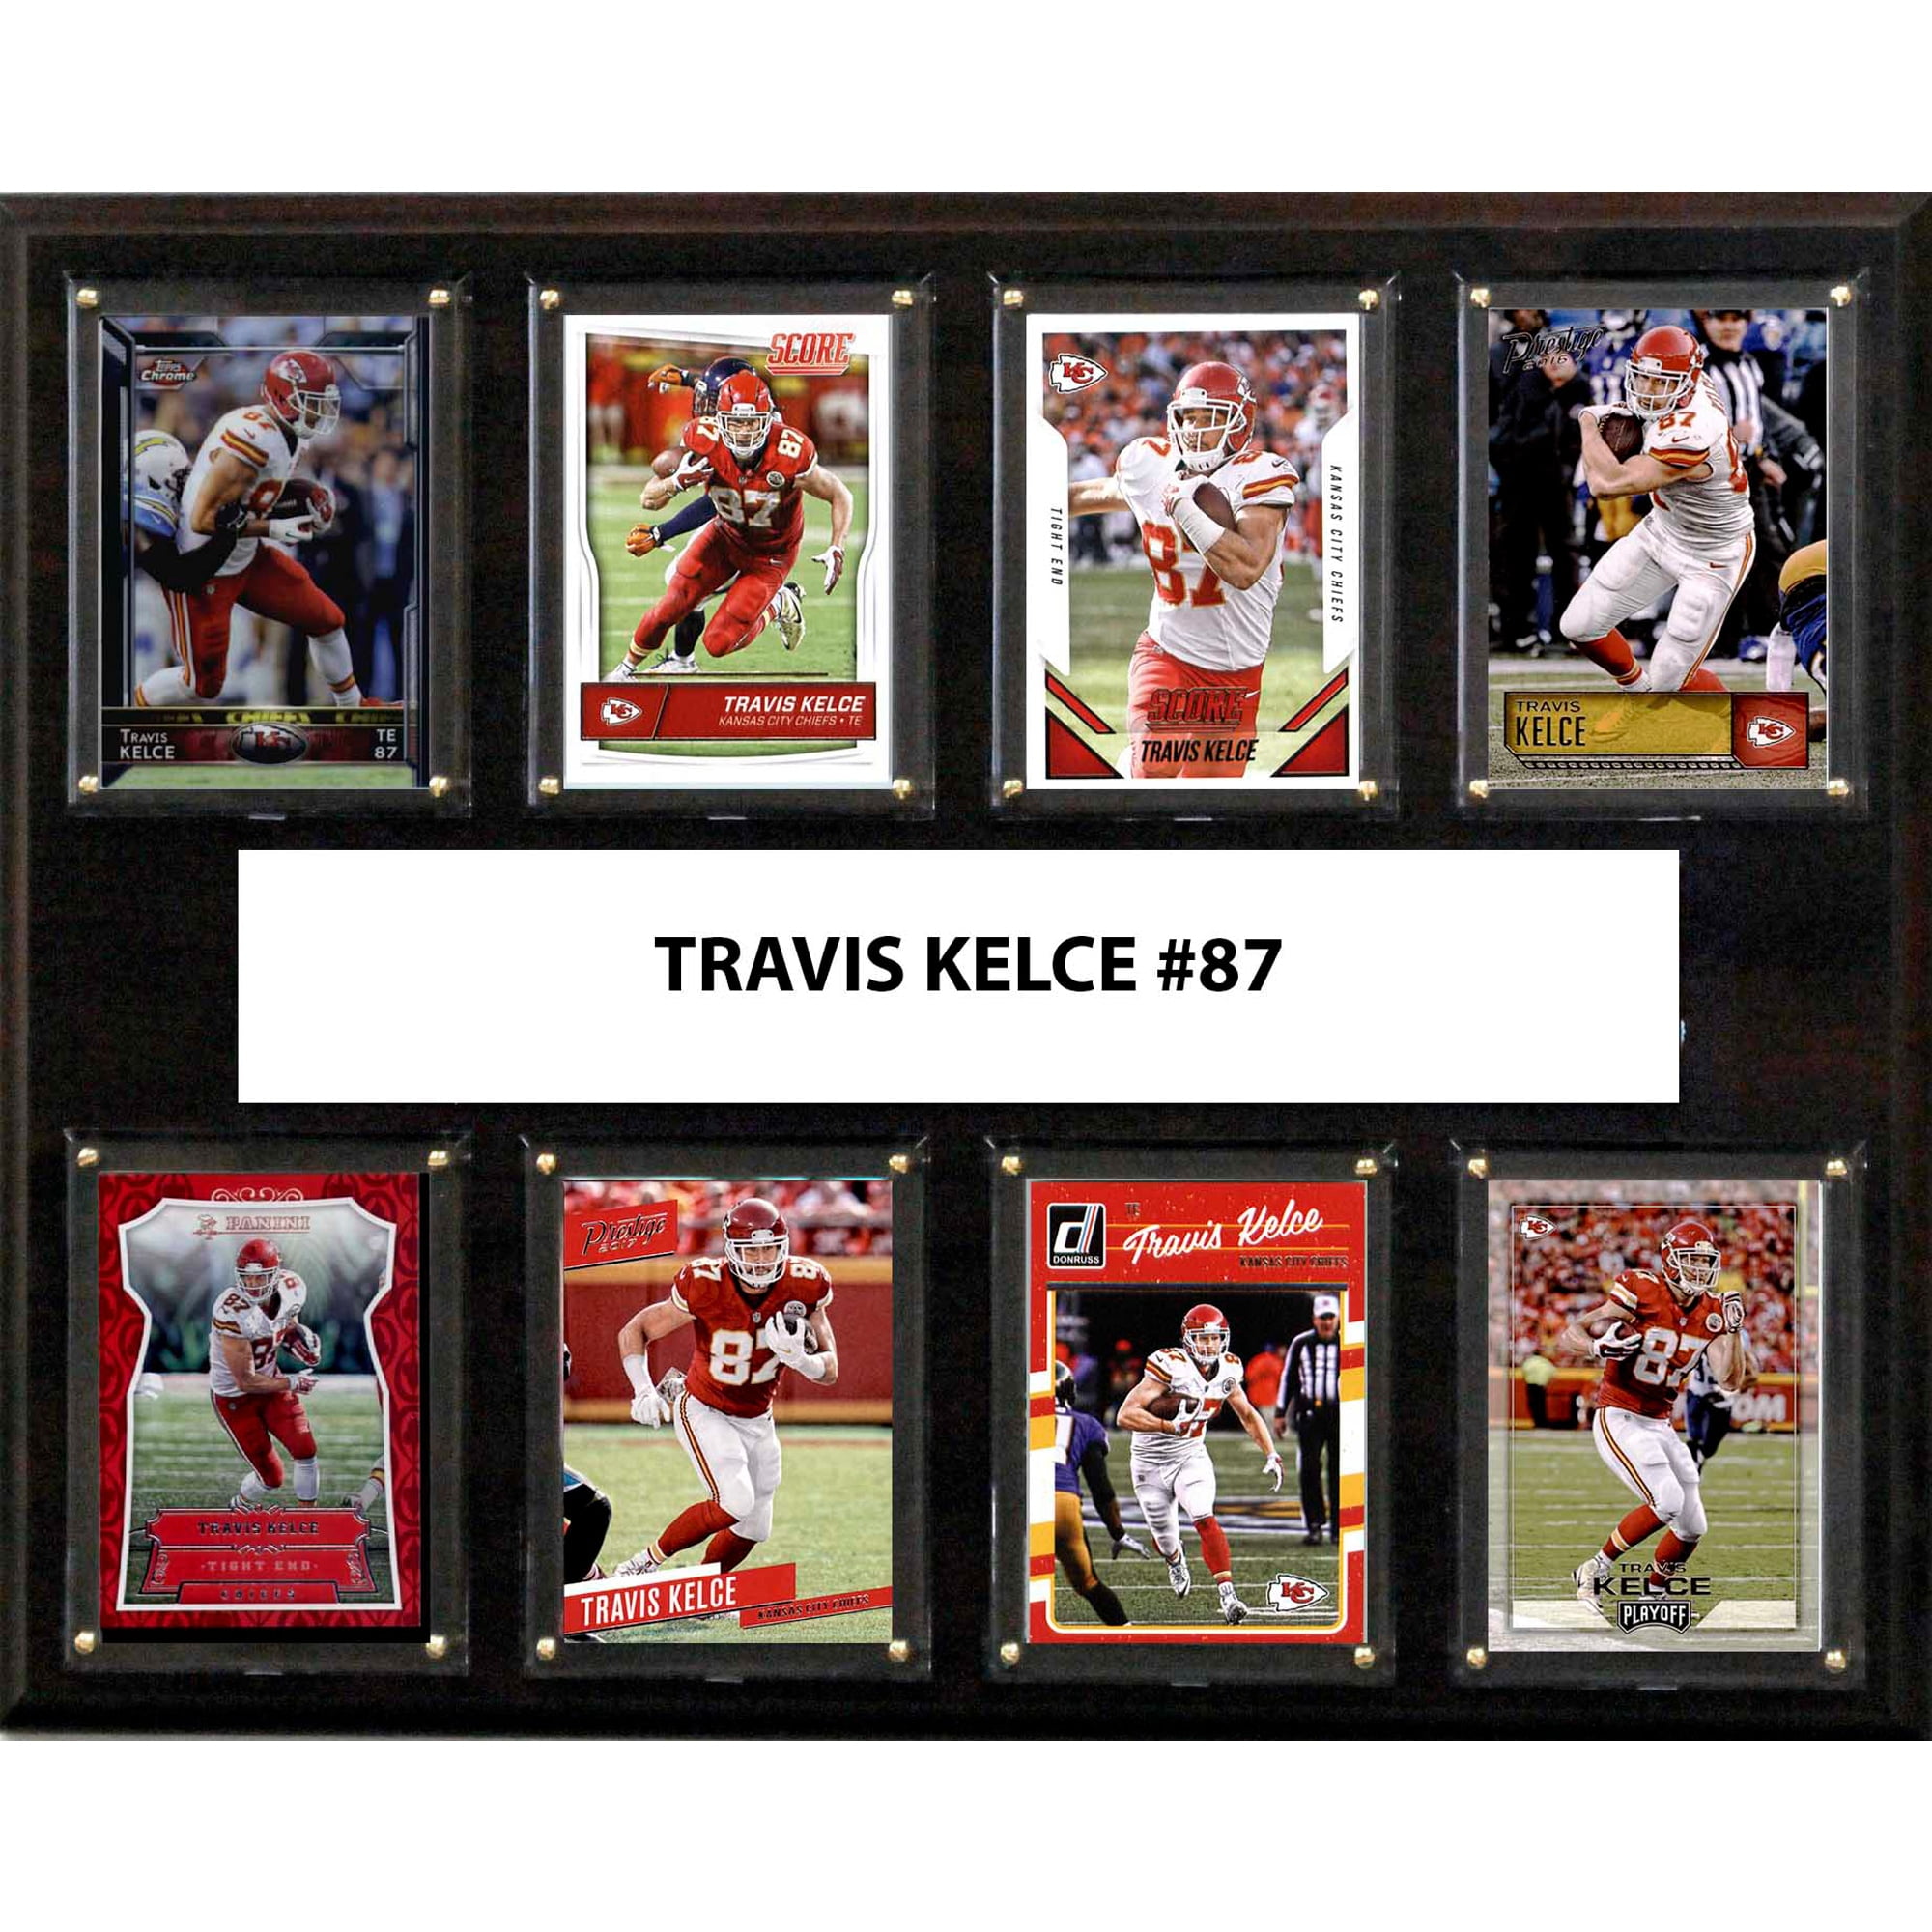 Travis Kelce Is the Kansas City Chiefs' Unicorn - The Ringer